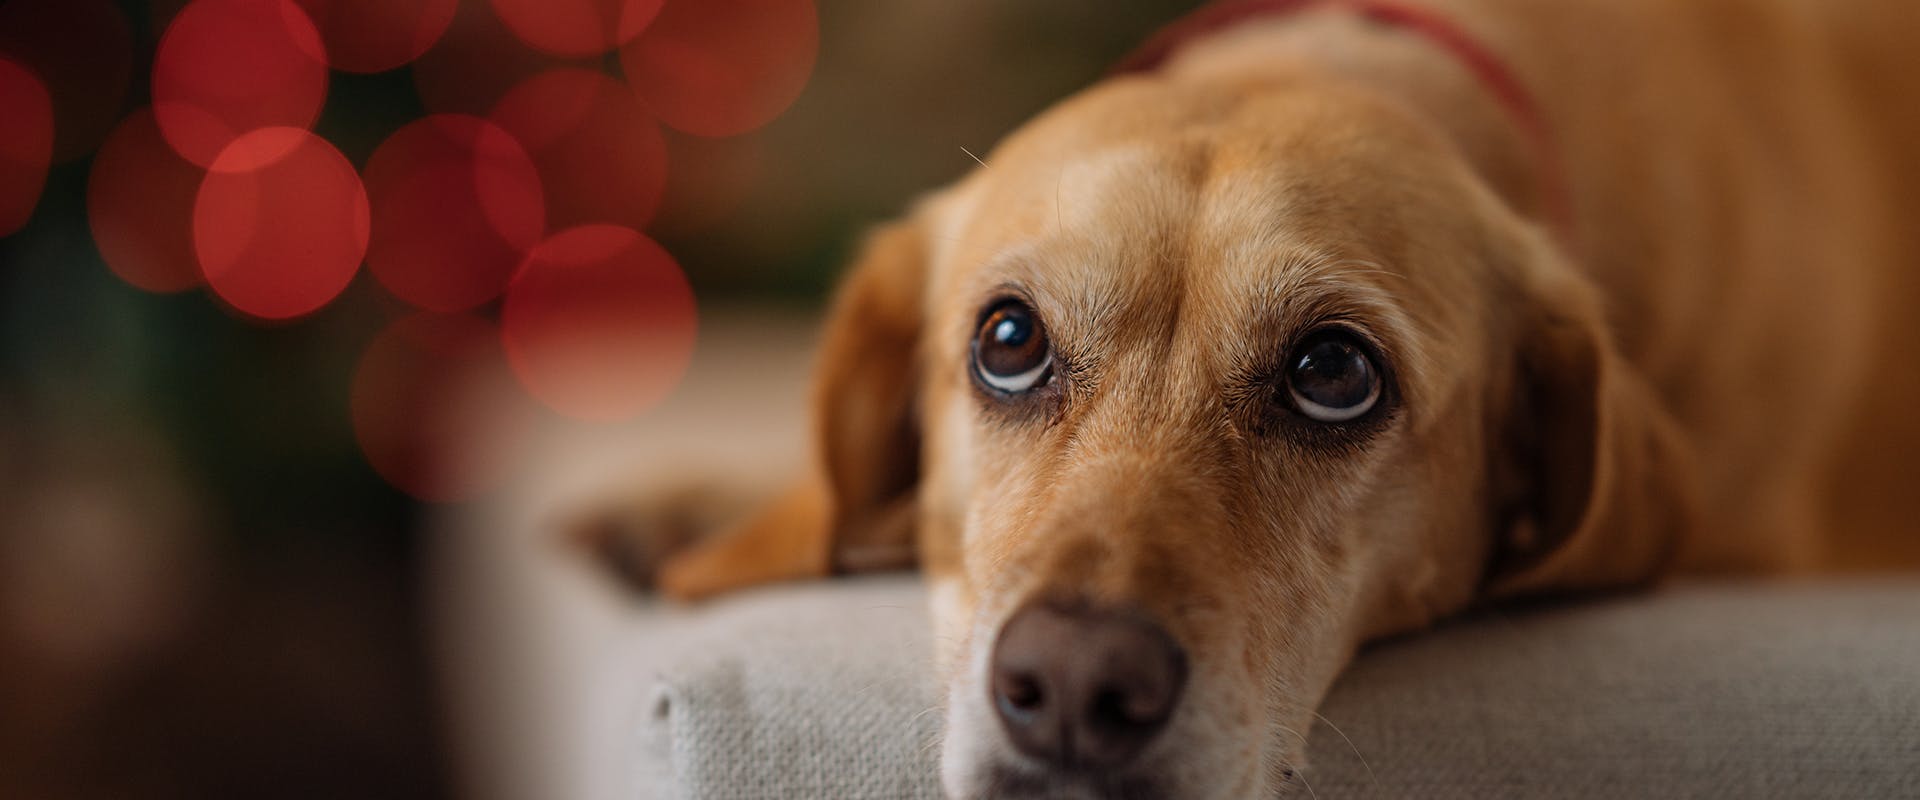 A large dog wearing a Christmas dog collar